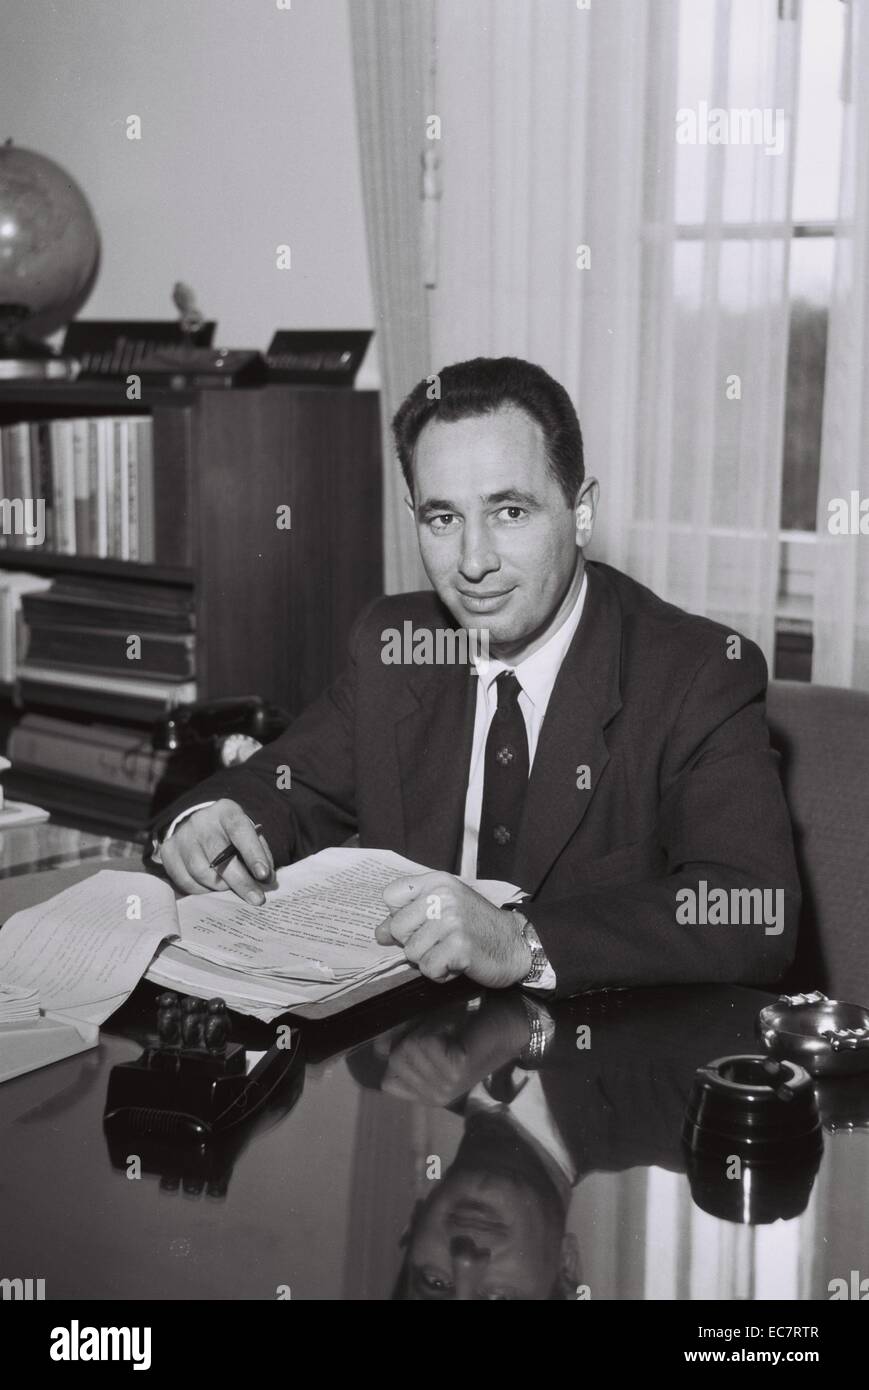 Shimon Peres AGOSTO 1923-presente. Estadista israelí nacido en Polonia. Presidente del Estado de Israel 2007-2014. Peres sirvió dos veces como Primer Ministro de Israel Foto de stock